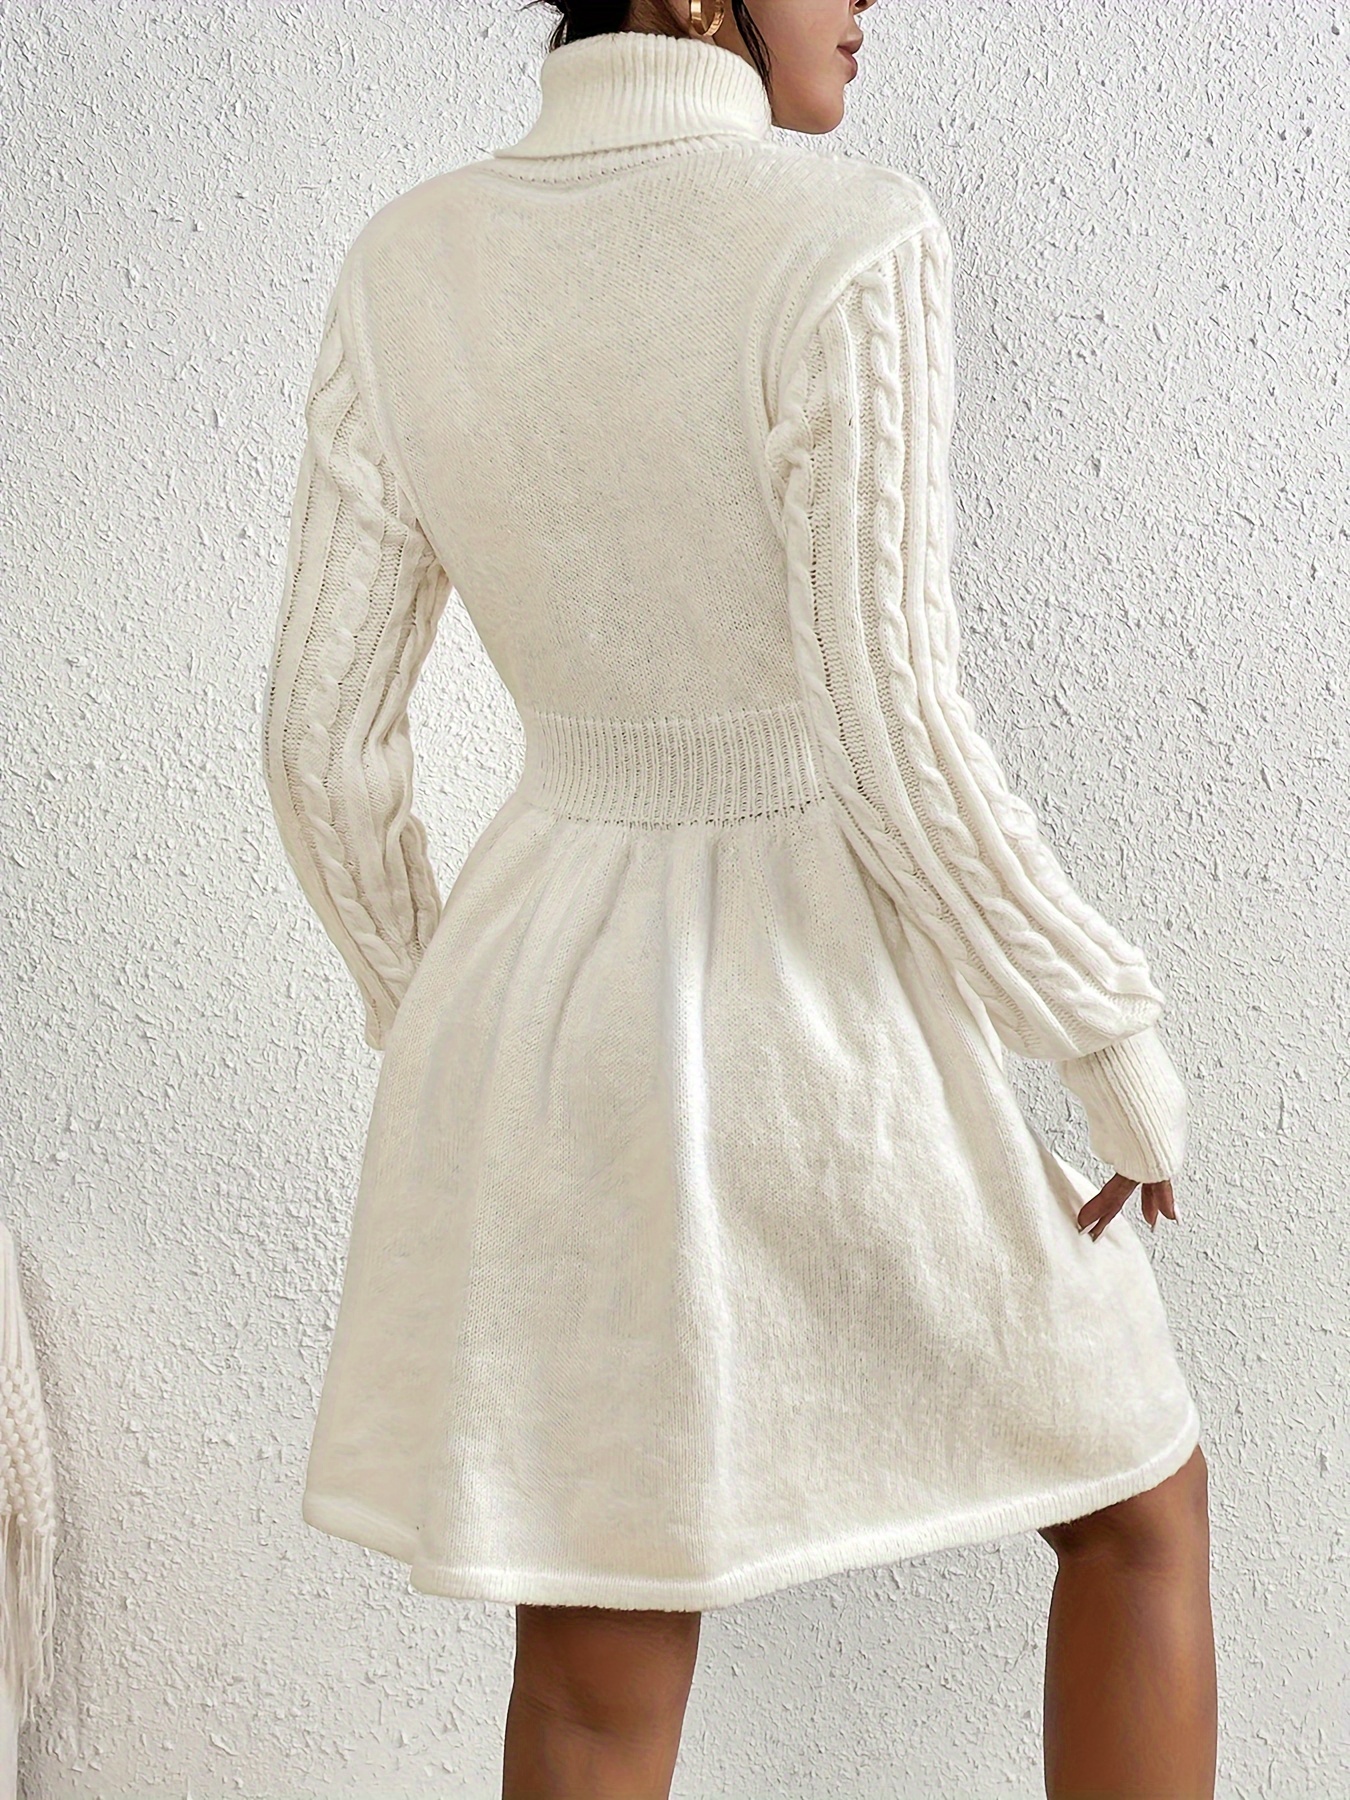 cable knit sweater dress elegant turtleneck long sleeve dress womens clothing details 0